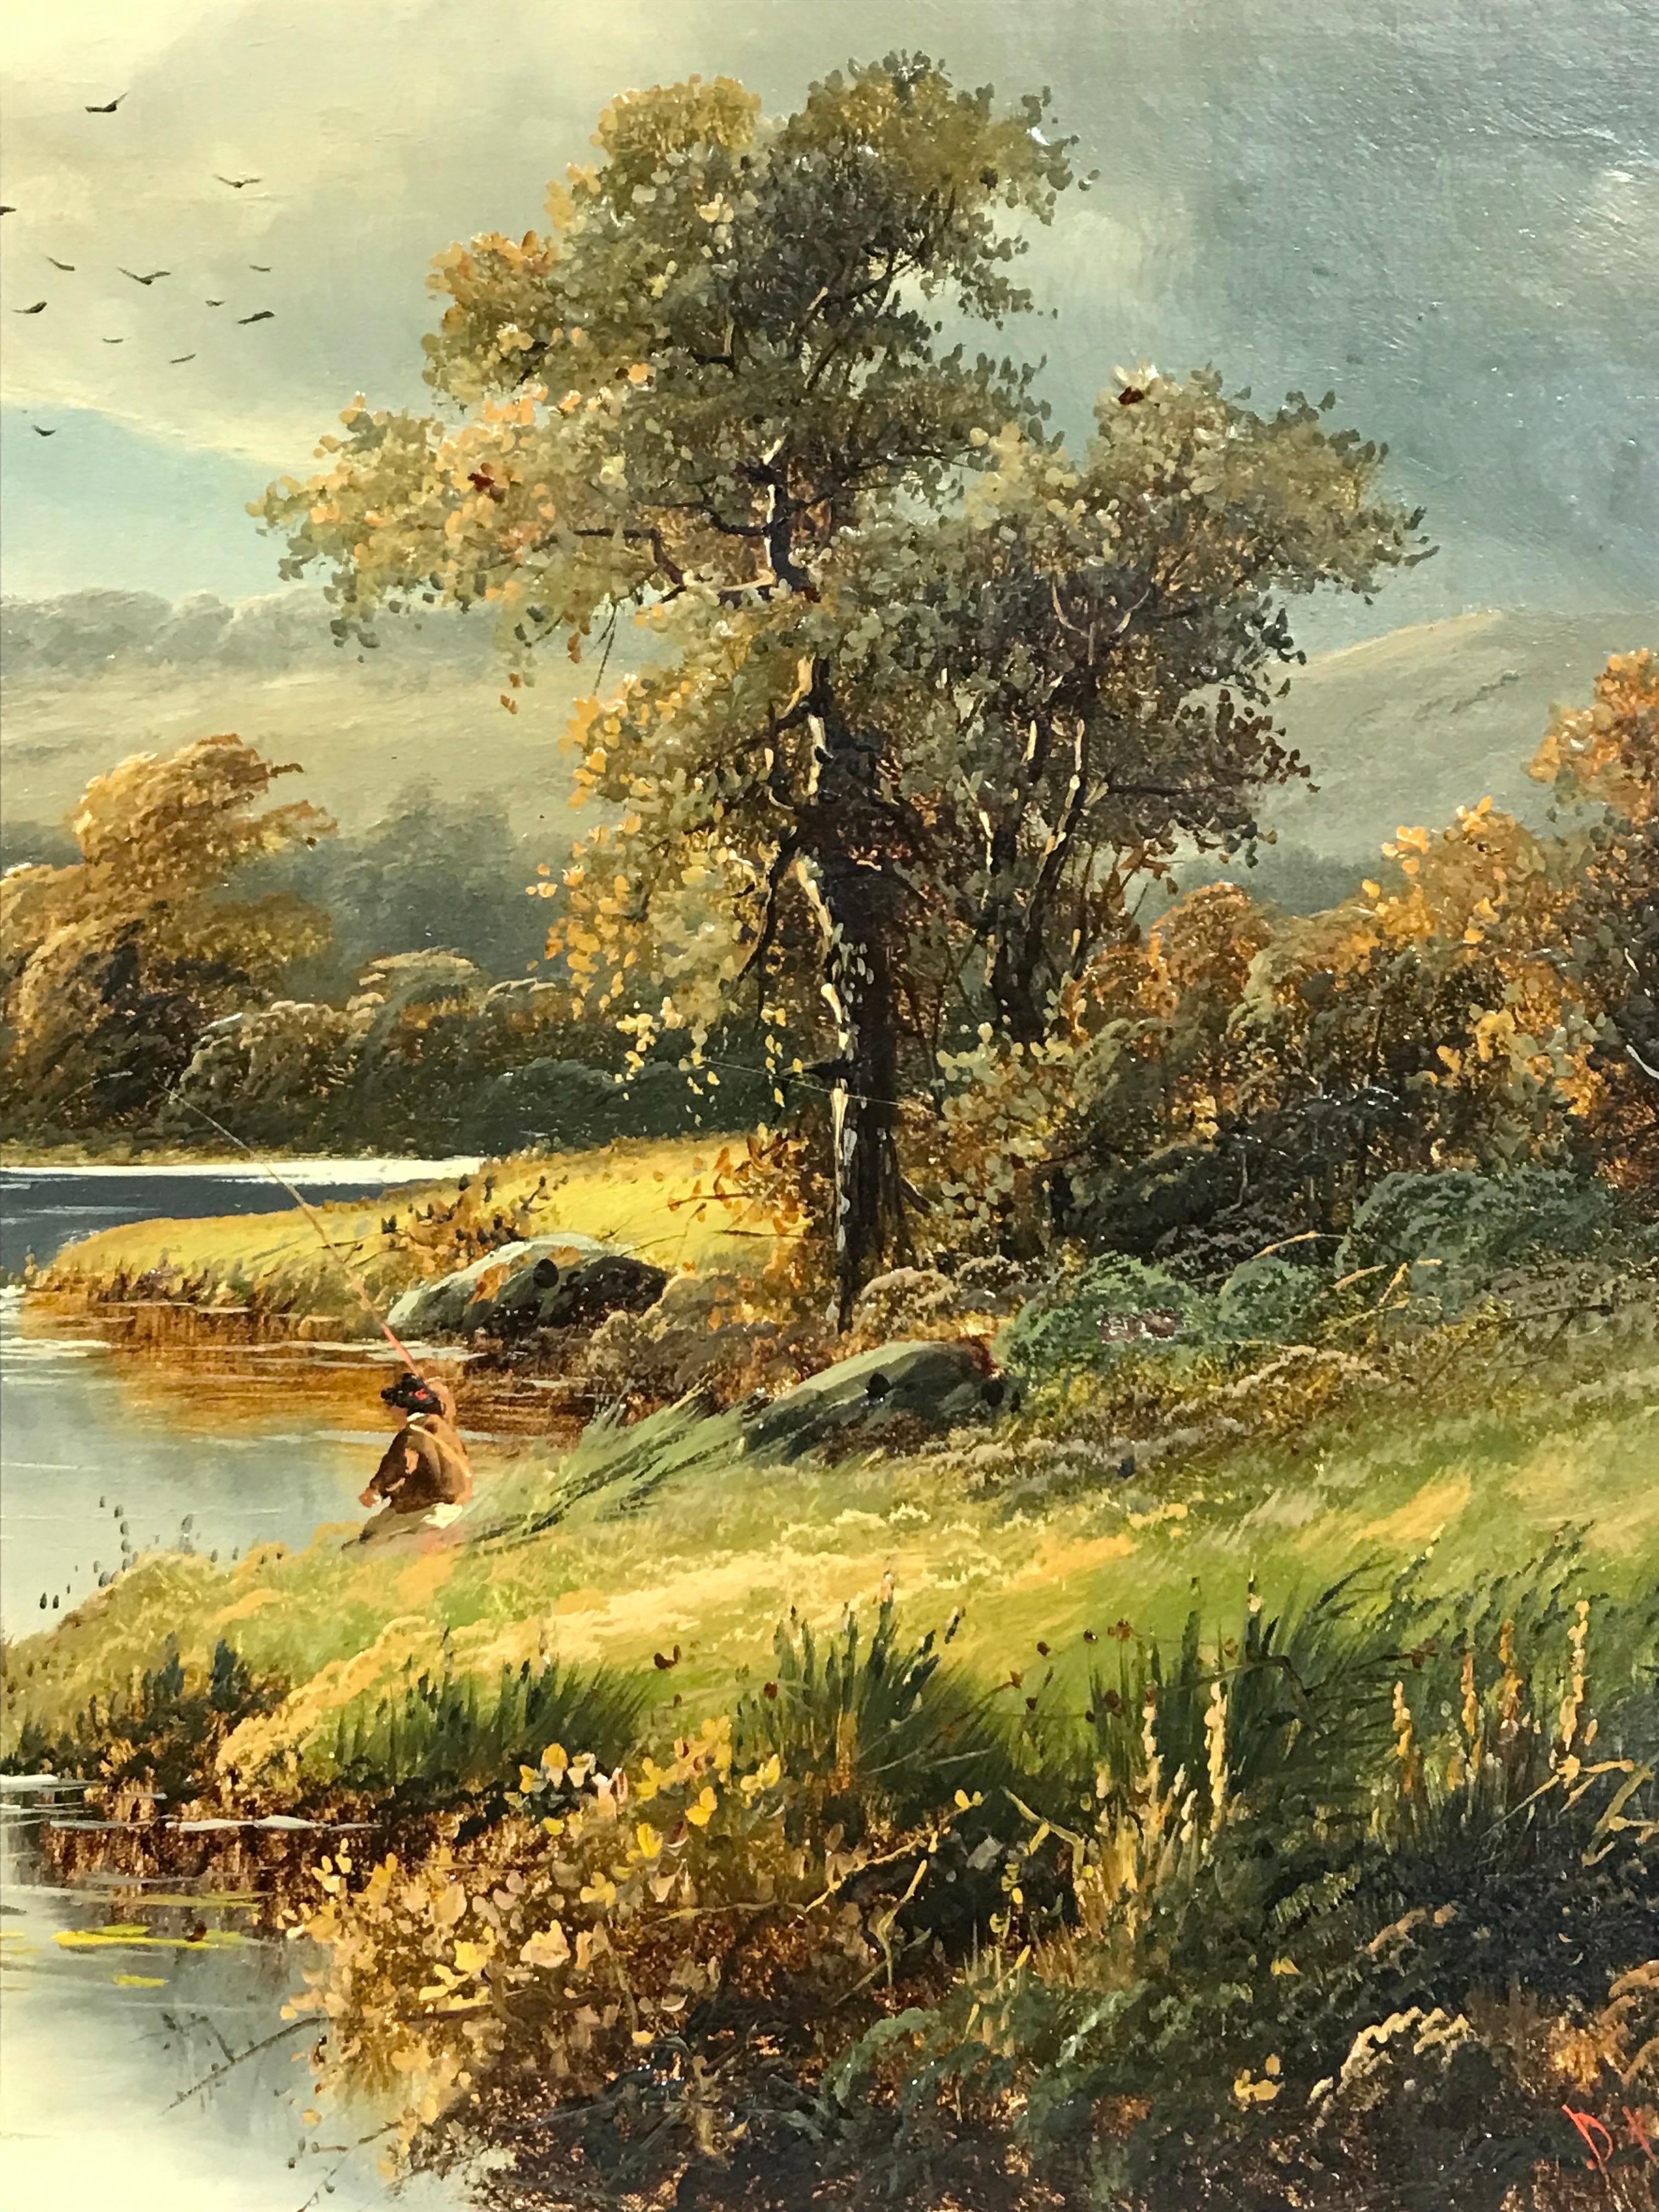 Belle peinture à l'huile victorienne du 19ème siècle, Angler in Scottish Highlands Landscape 1